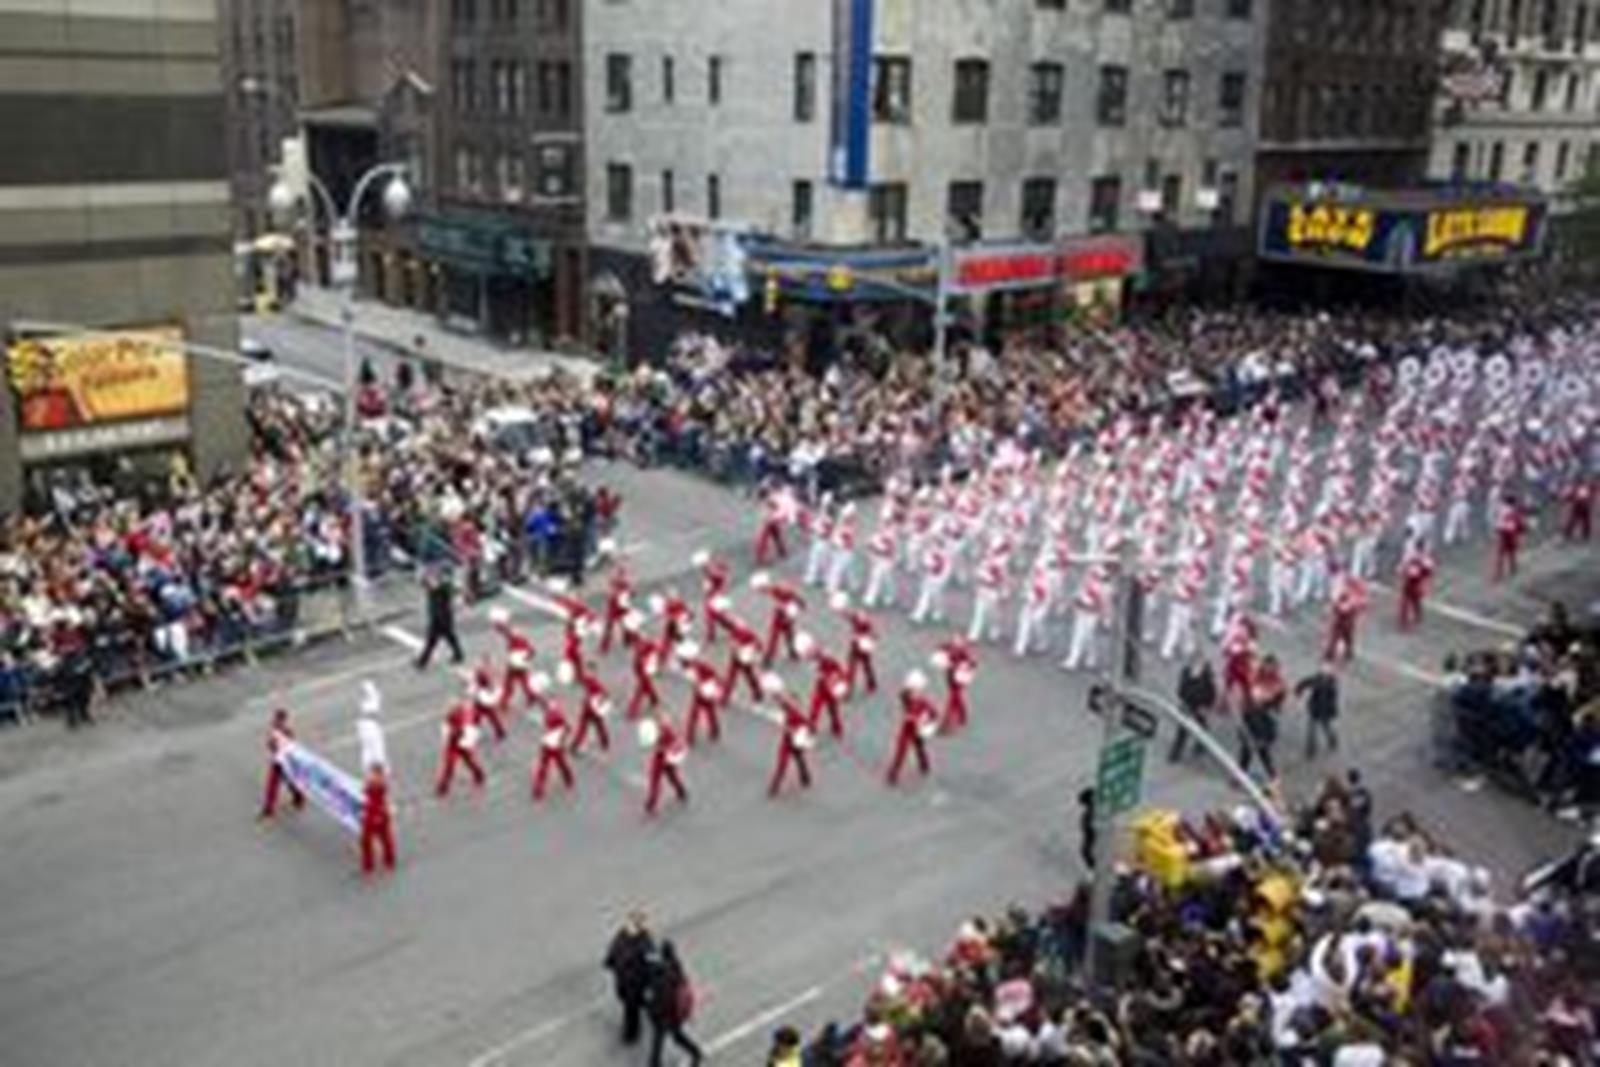 Macy's Thanksgiving Day Parade. Photo from NYCgo.com